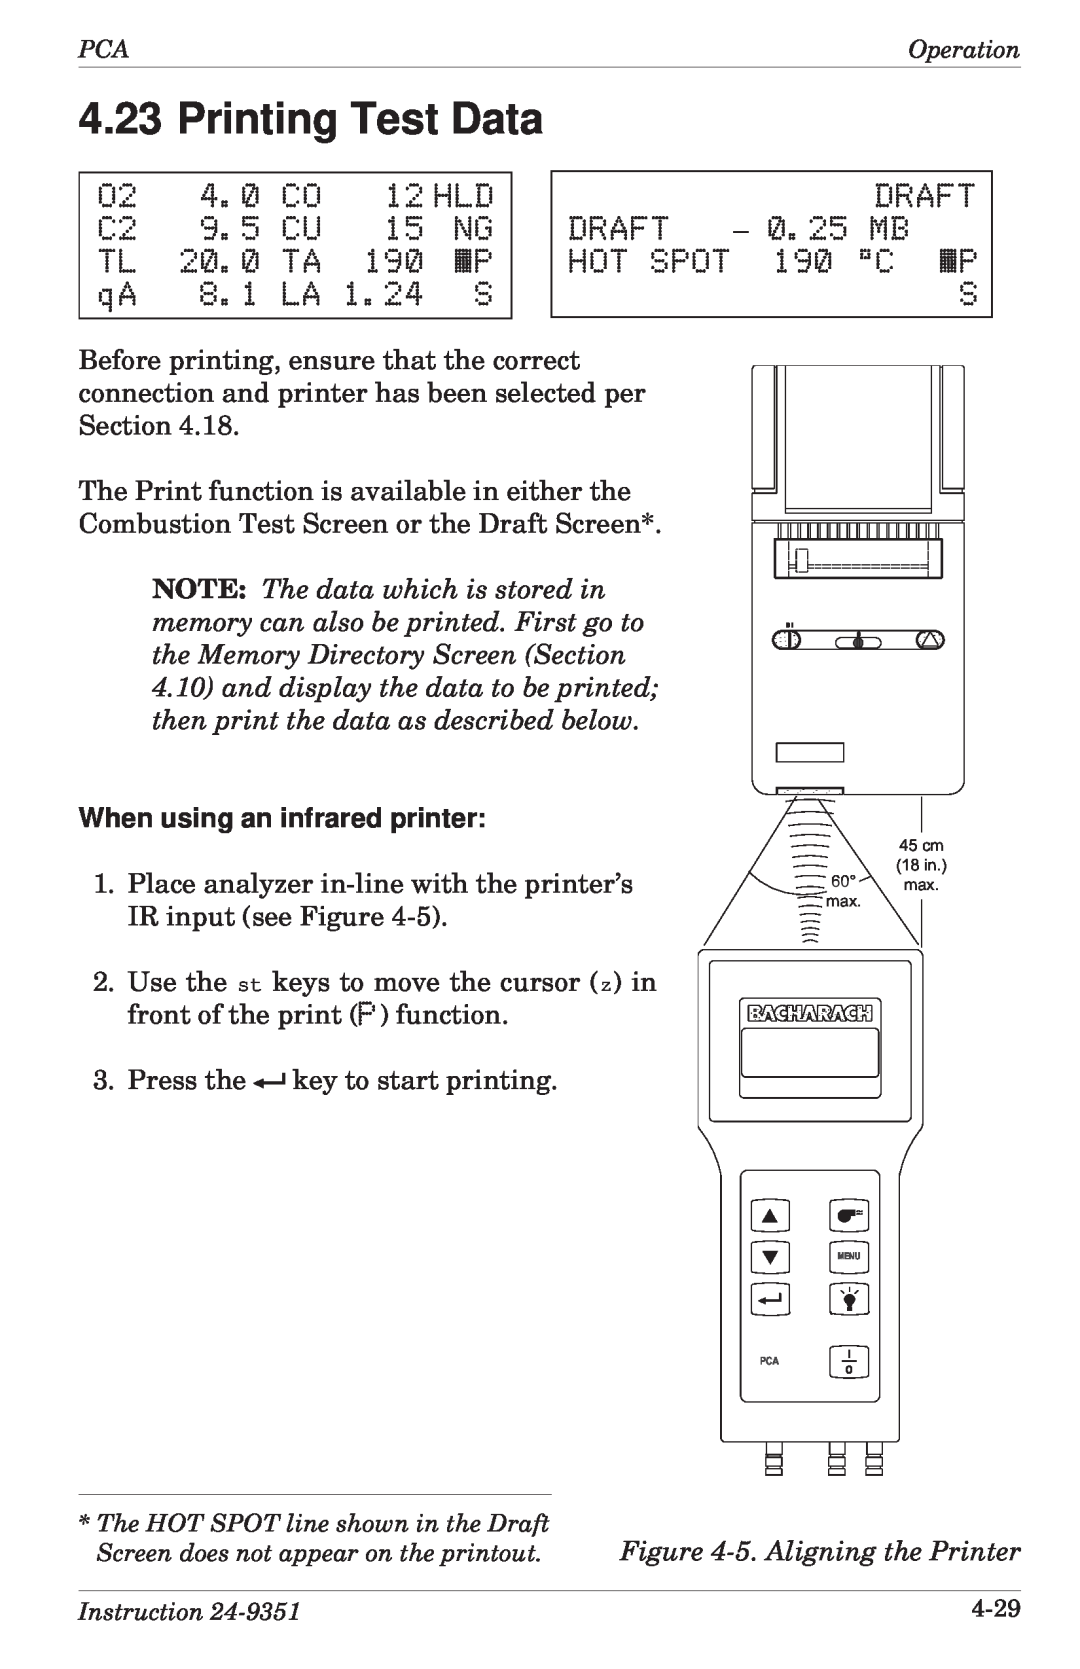 Bacharach 24-9351 Printing Test Data, 12 HLD, Draft, 0.25 MB, 190 C «P, When using an infrared printer, 20.0, Hot Spot 